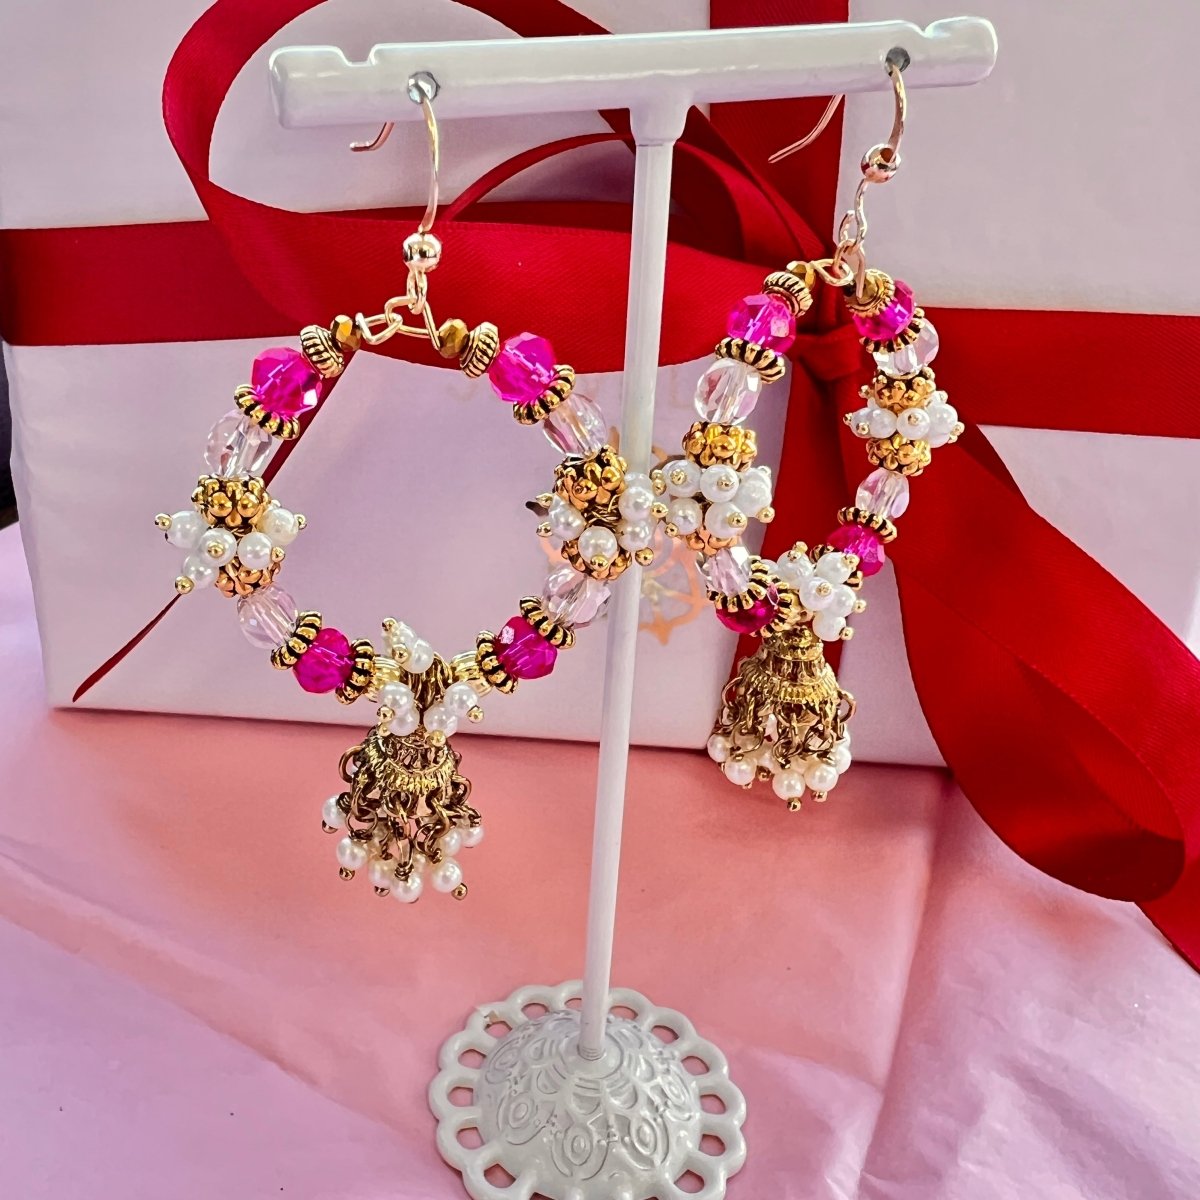 Valentines Gift Box Set - Pink - SOKORA JEWELSValentines Gift Box Set - Pink